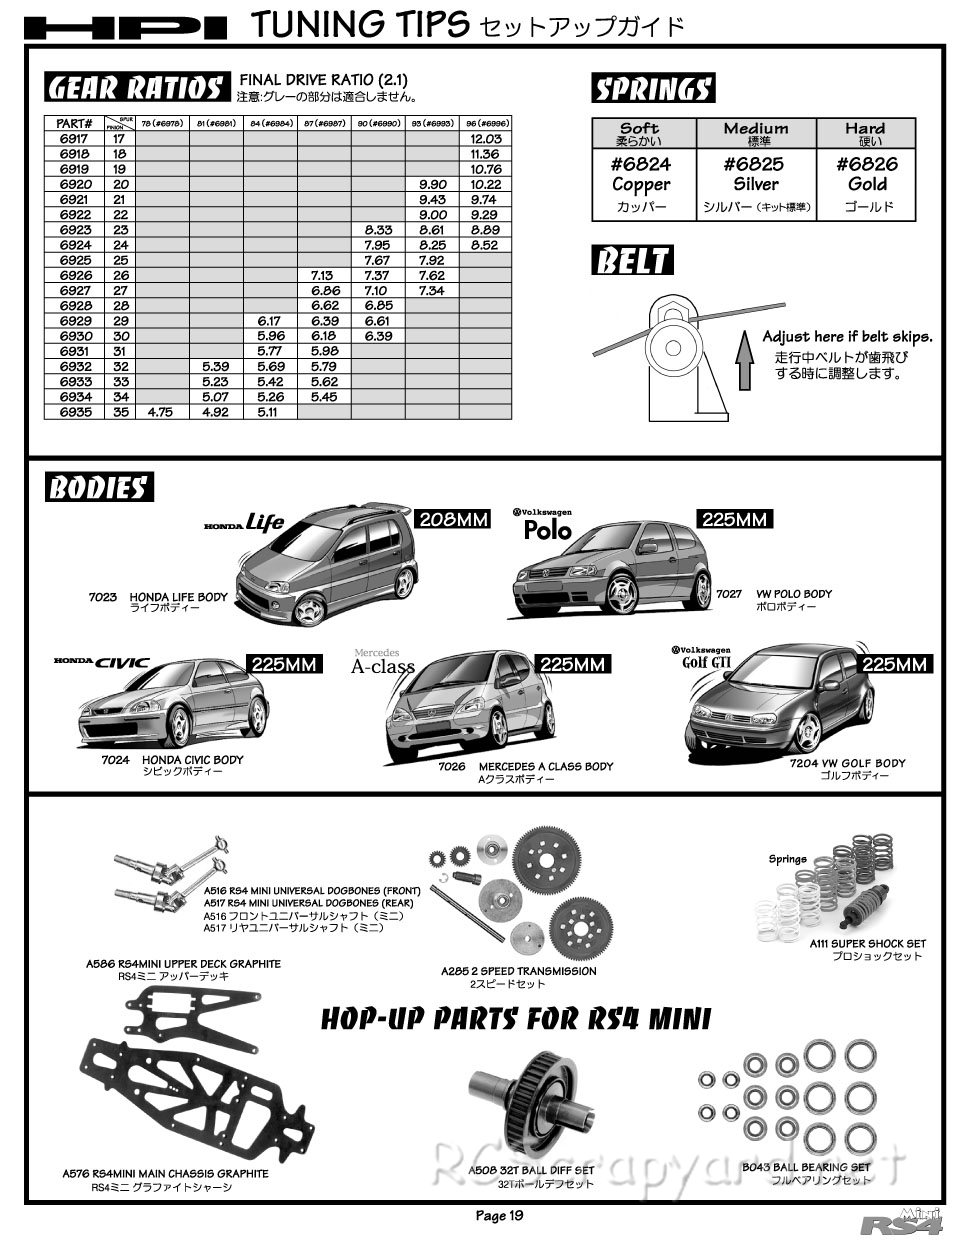 HPI - RS4 Mini - Manual - Page 19